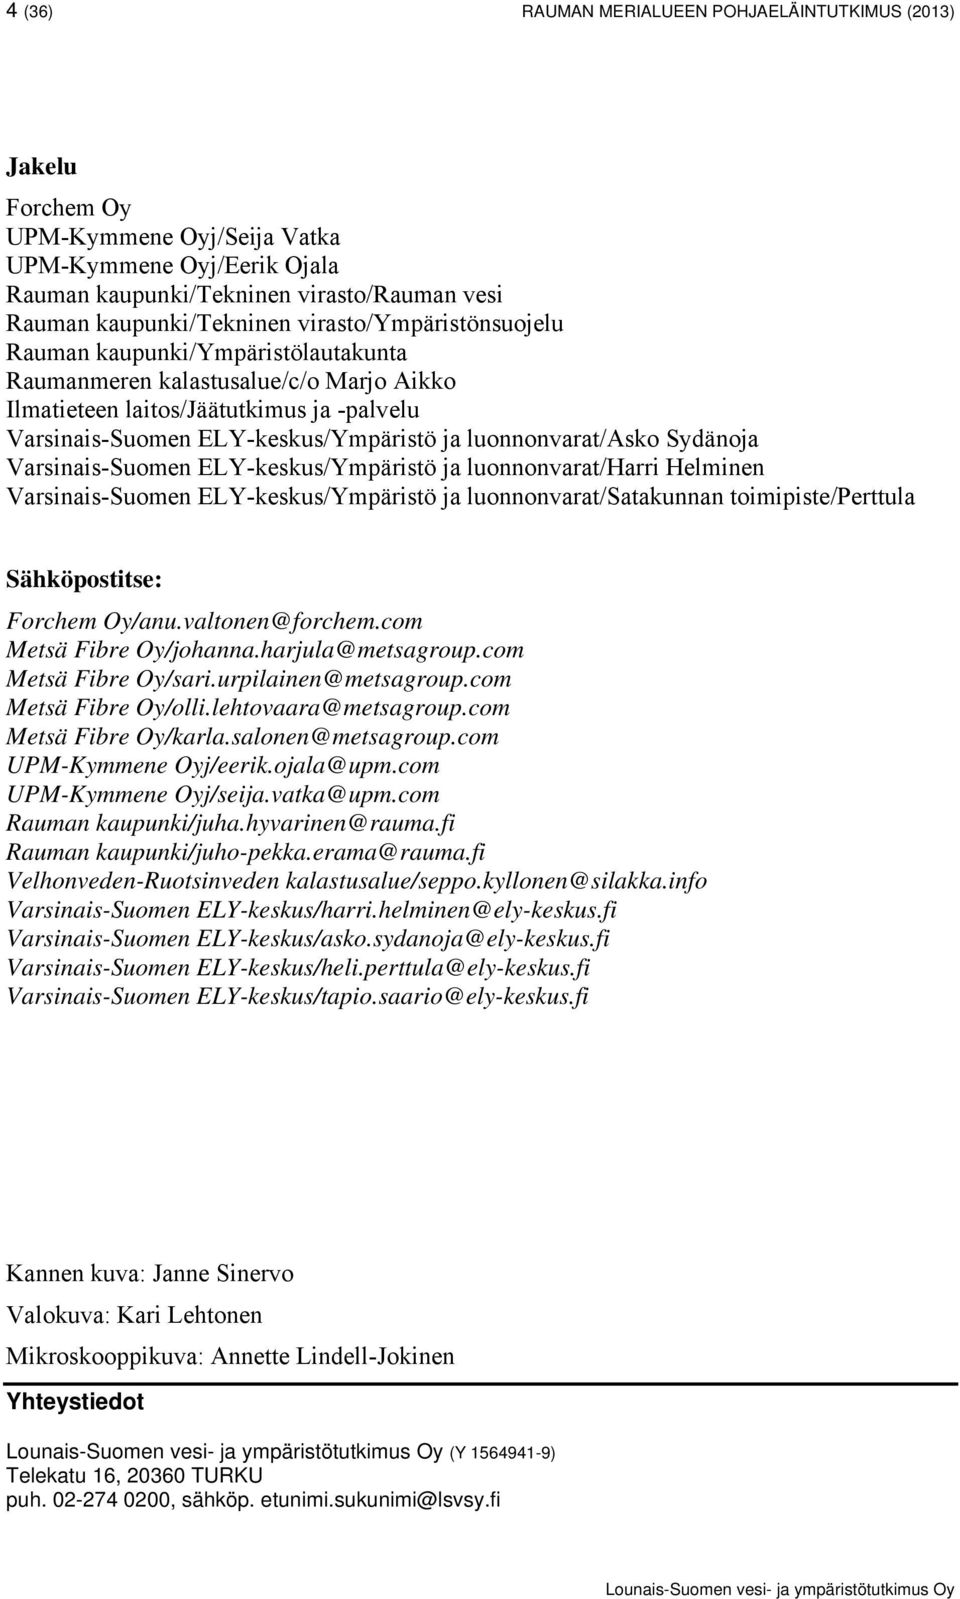 Varsinais-Suomen ELY-keskus/Ympäristö ja luonnonvarat/harri Helminen Varsinais-Suomen ELY-keskus/Ympäristö ja luonnonvarat/satakunnan toimipiste/perttula Sähköpostitse: Forchem Oy/anu.